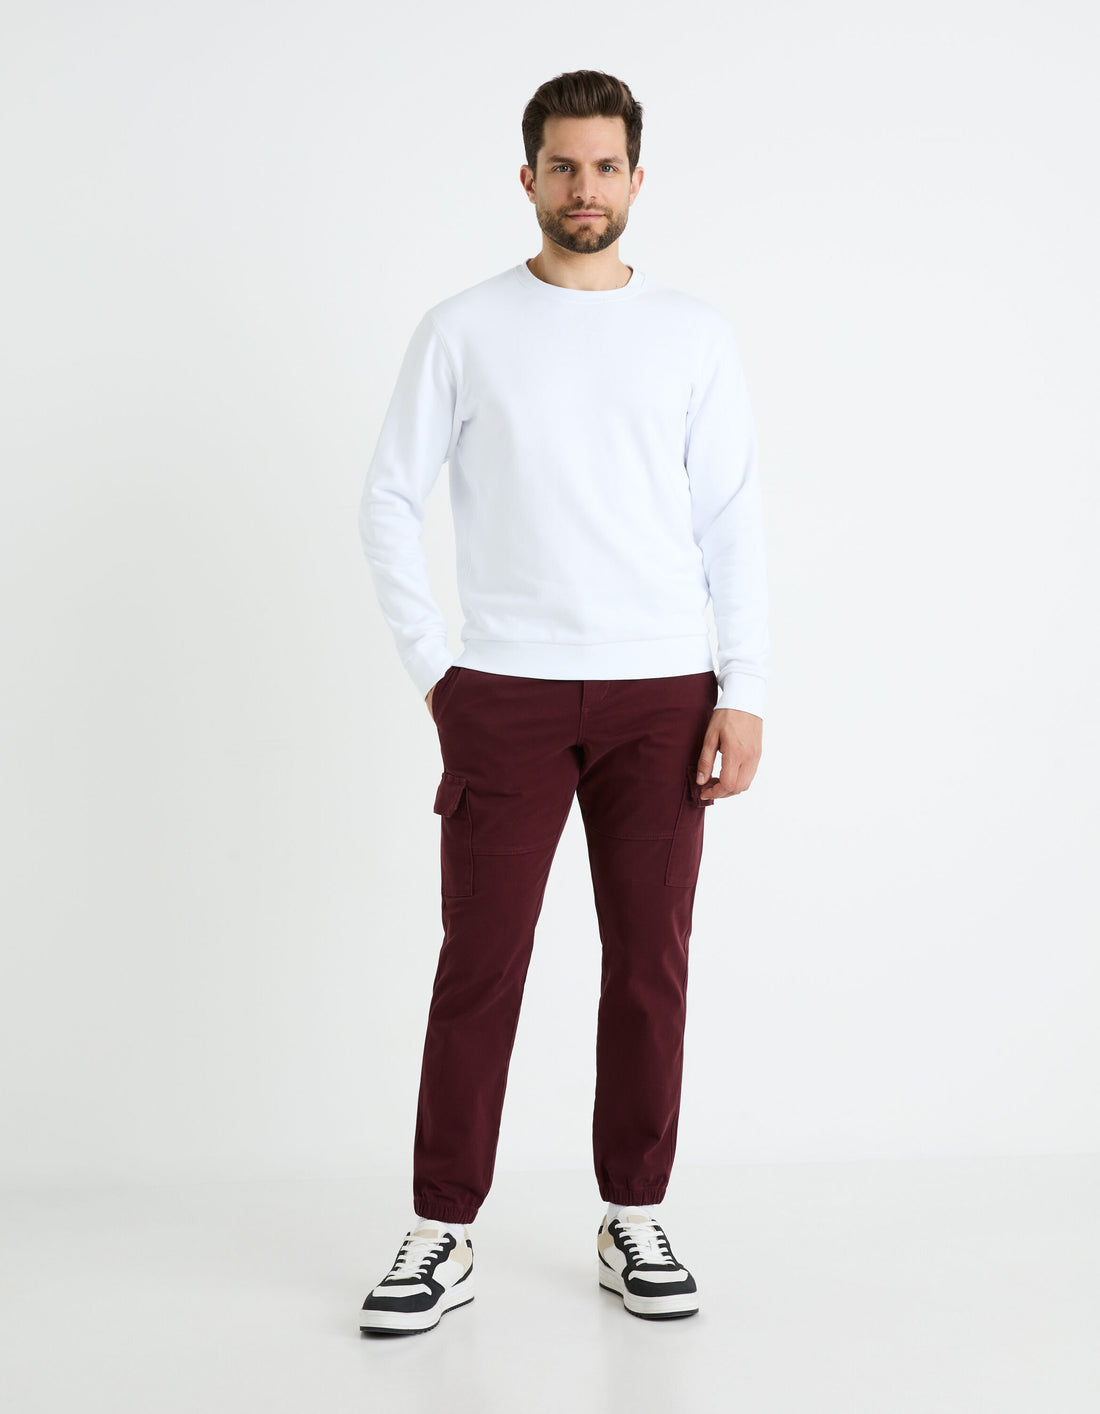 Round Neck Sweatshirt Cotton_FESEVEN_OPTICAL WHITE_02